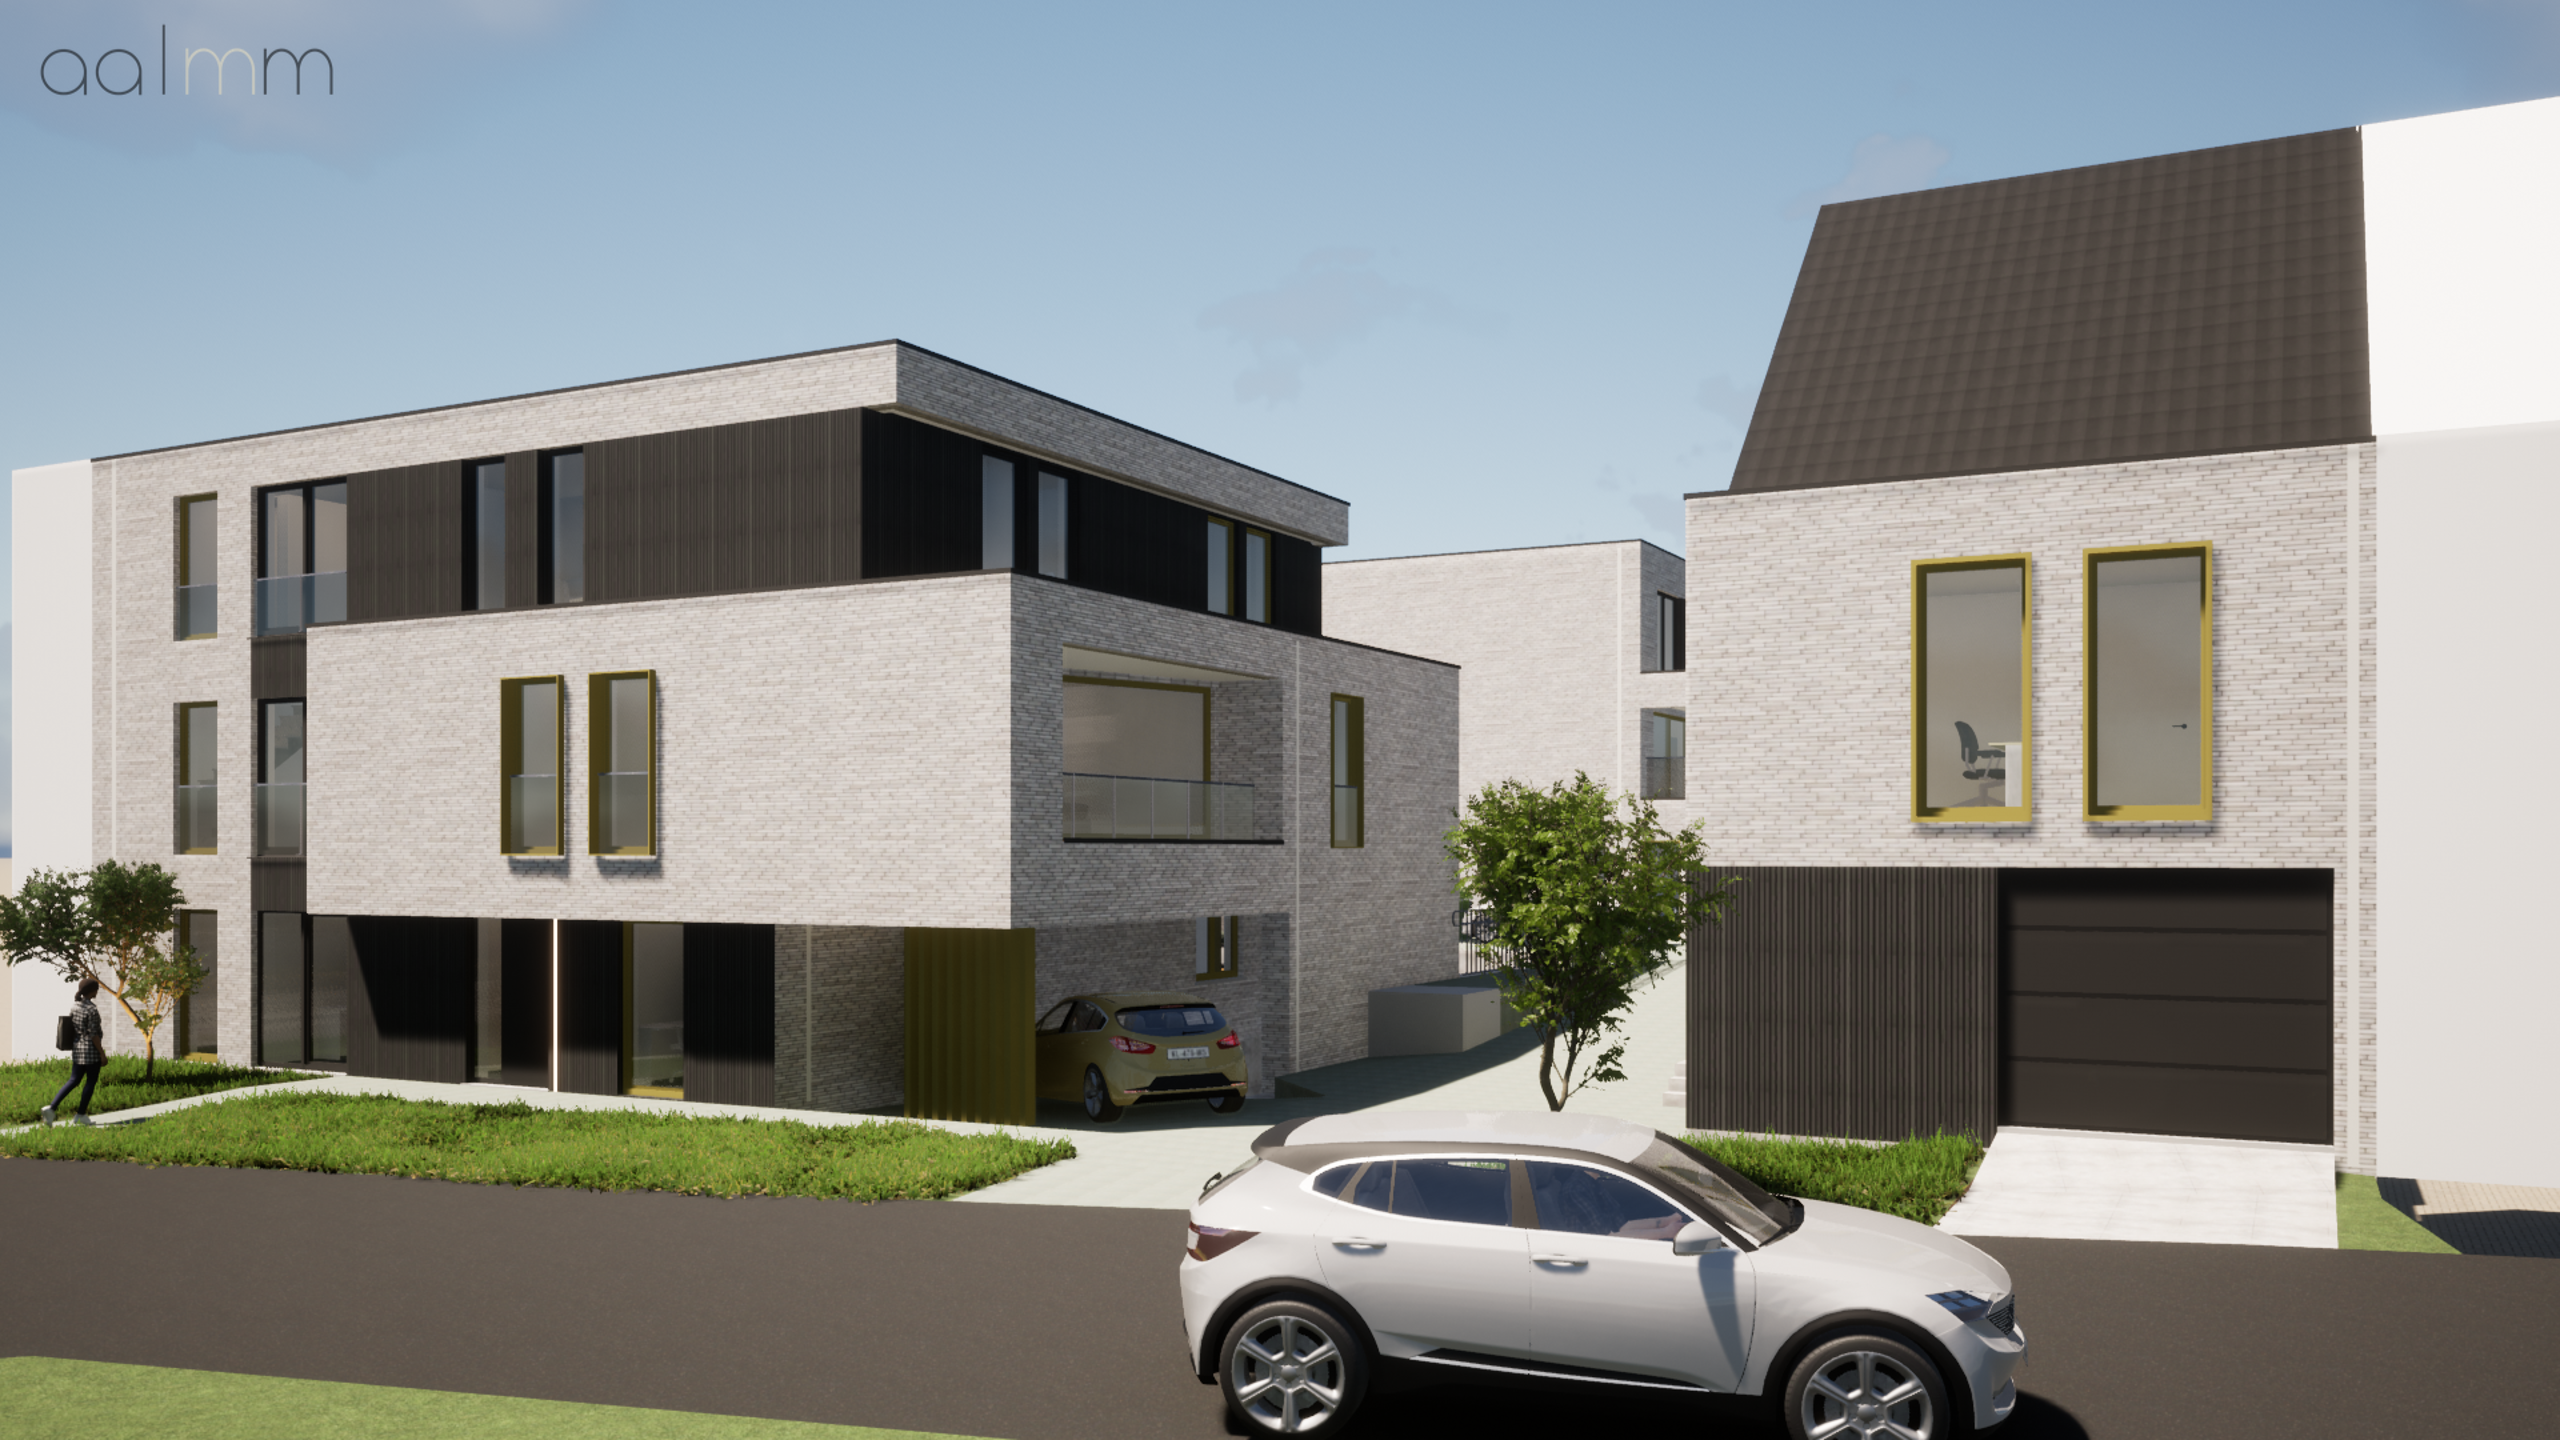 Duplex te  koop in Liedekerke 1770 430000.00€ 3 slaapkamers 137.28m² - Zoekertje 1376520